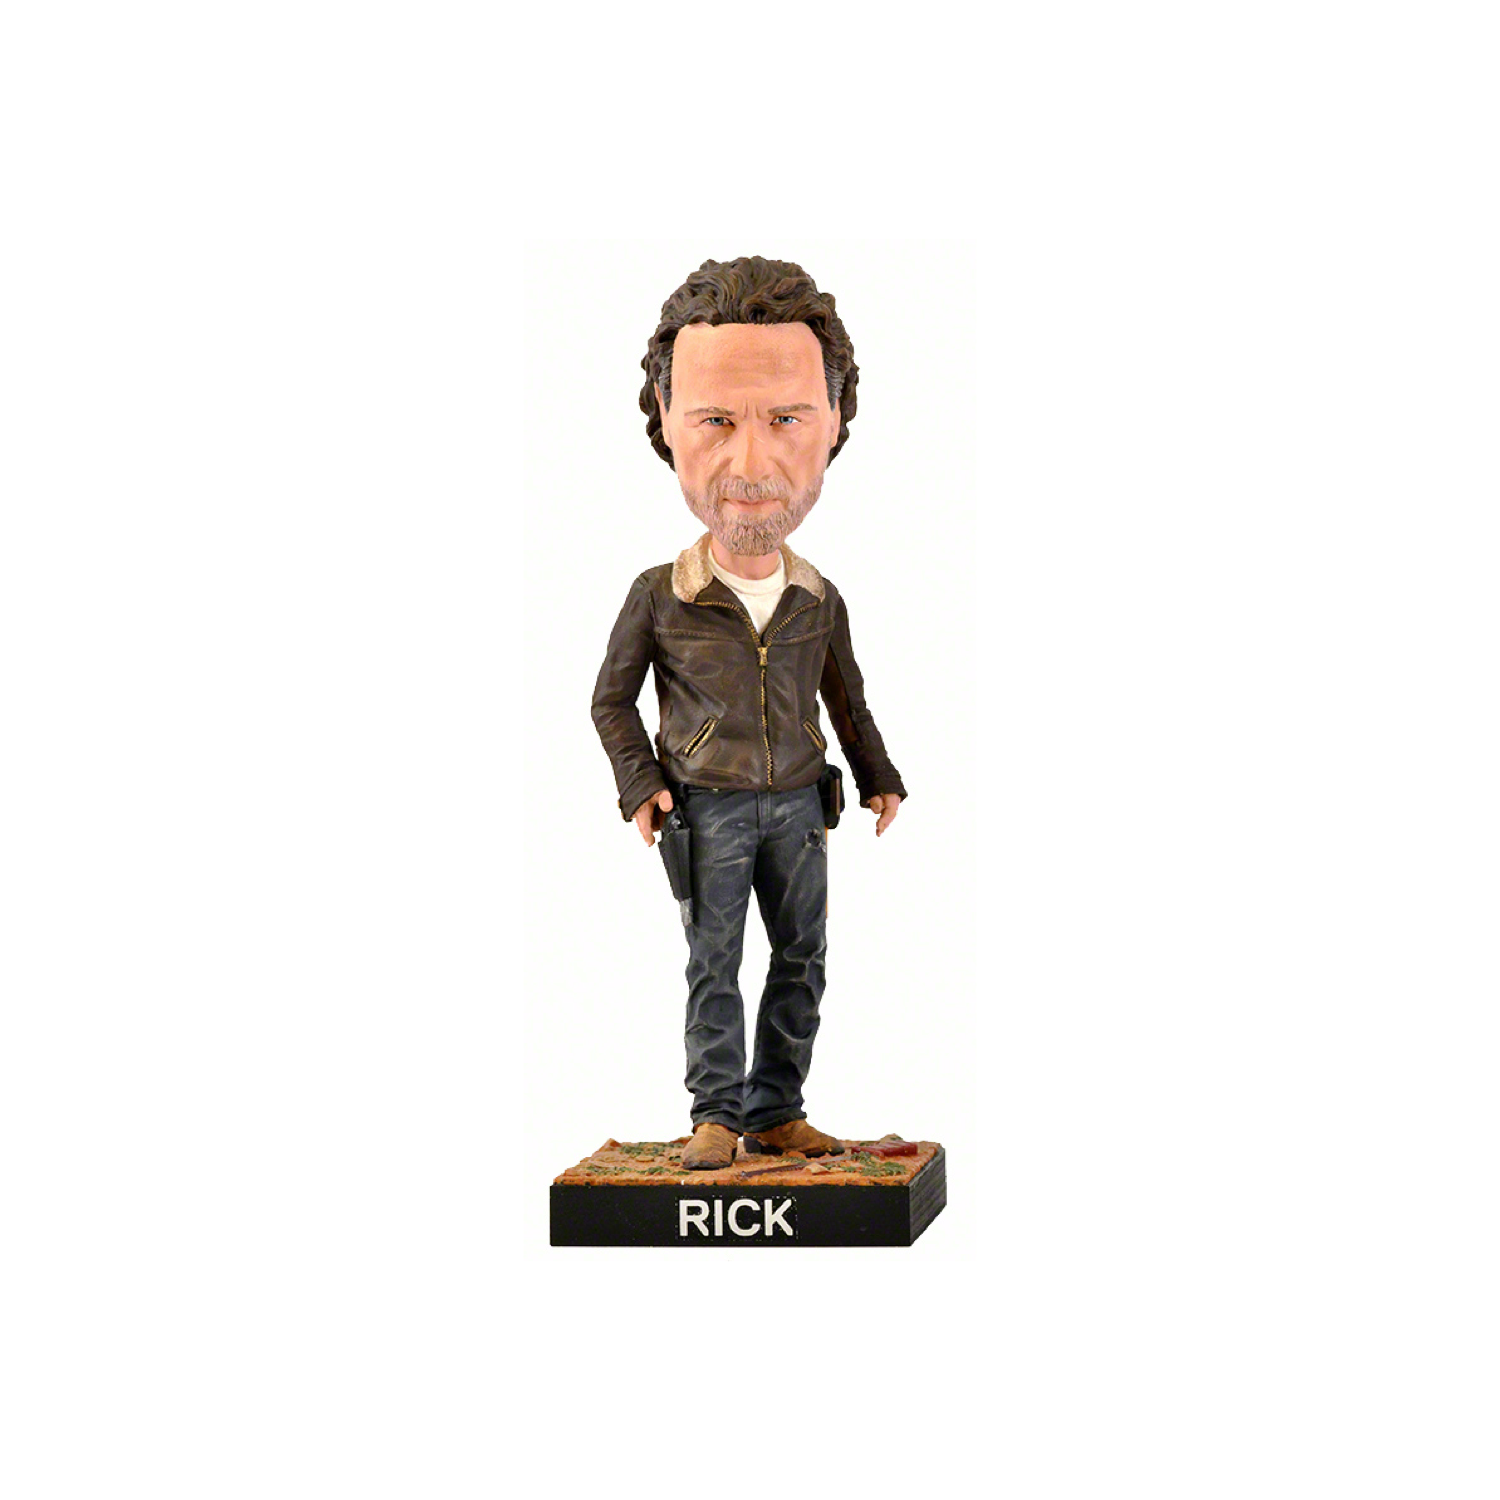 Rick - The Walking Dead Bobblehead